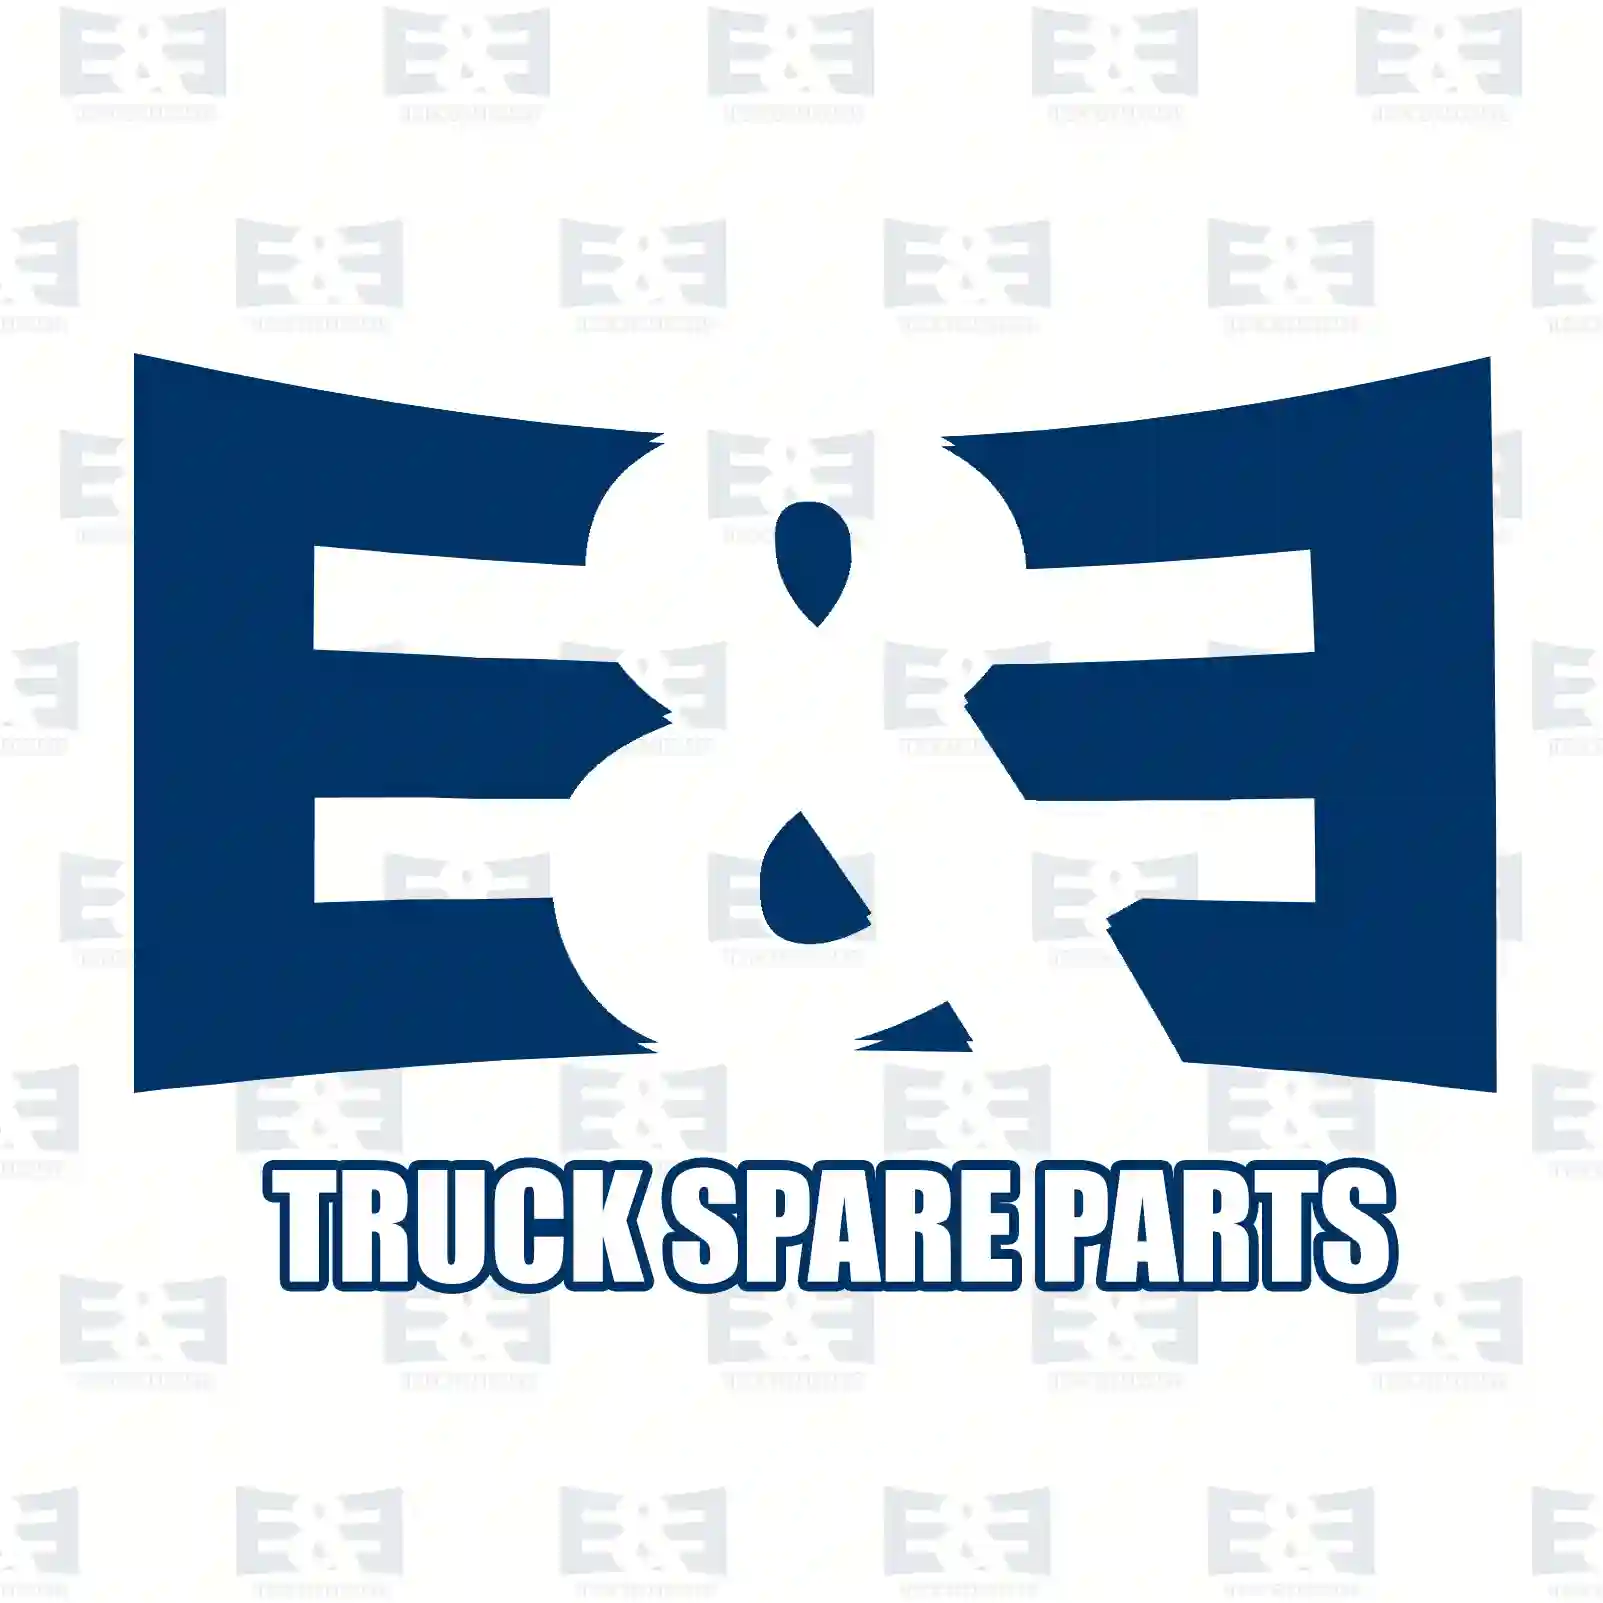 ABS sensor, front, 2E2290440, 4042001, 4099156, 4446245, 4540494, YC15-2B372-AB, YC15-2B372-AC, YC15-2B372-AD, YC15-2B372-AE, YC15-2B372-AF ||  2E2290440 E&E Truck Spare Parts | Truck Spare Parts, Auotomotive Spare Parts ABS sensor, front, 2E2290440, 4042001, 4099156, 4446245, 4540494, YC15-2B372-AB, YC15-2B372-AC, YC15-2B372-AD, YC15-2B372-AE, YC15-2B372-AF ||  2E2290440 E&E Truck Spare Parts | Truck Spare Parts, Auotomotive Spare Parts